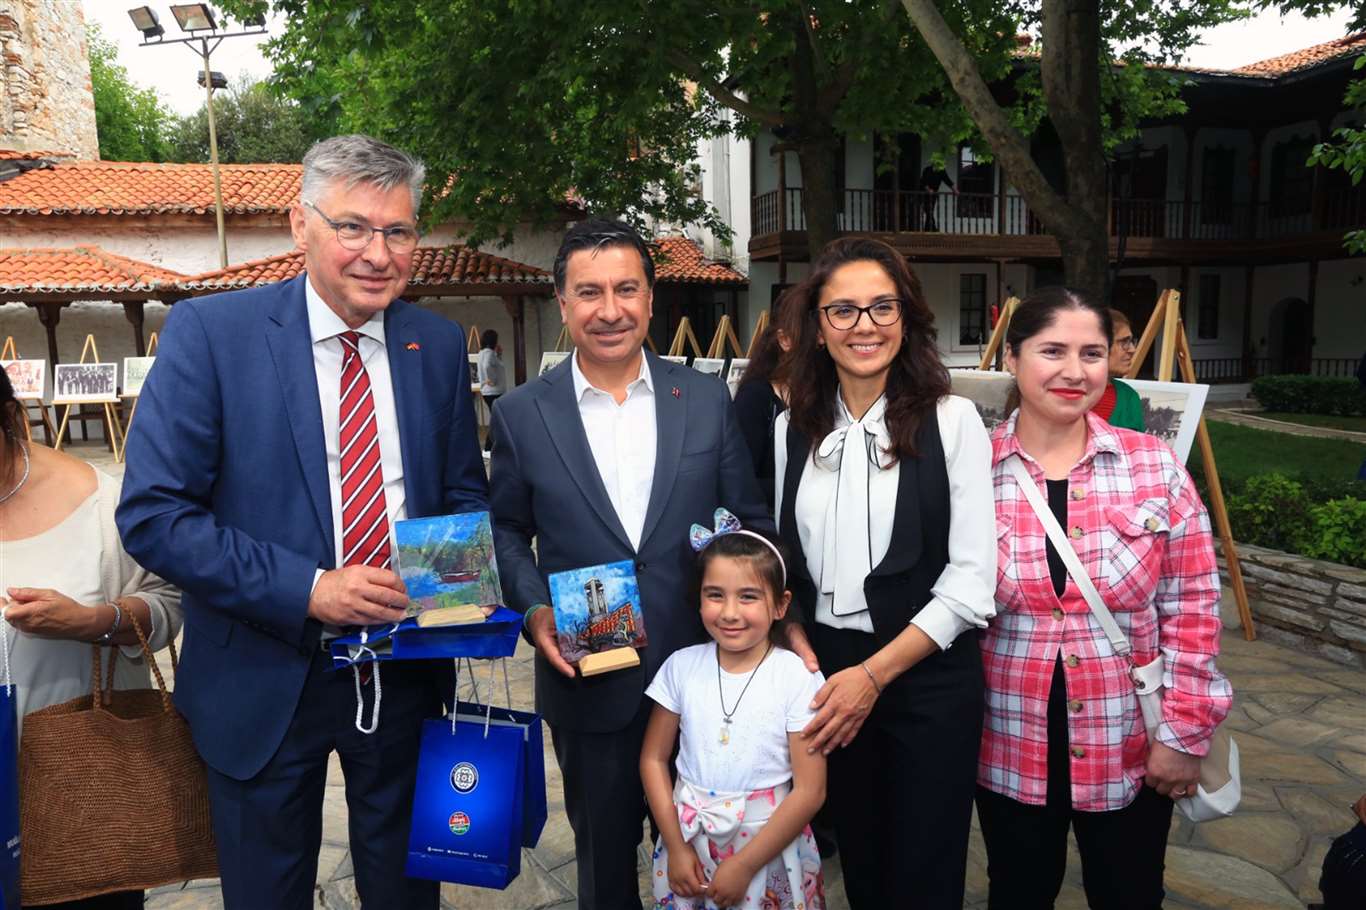       Almanya İzmir Başkonsolosu'ndan Başkan Aras'a ziyaret haberi